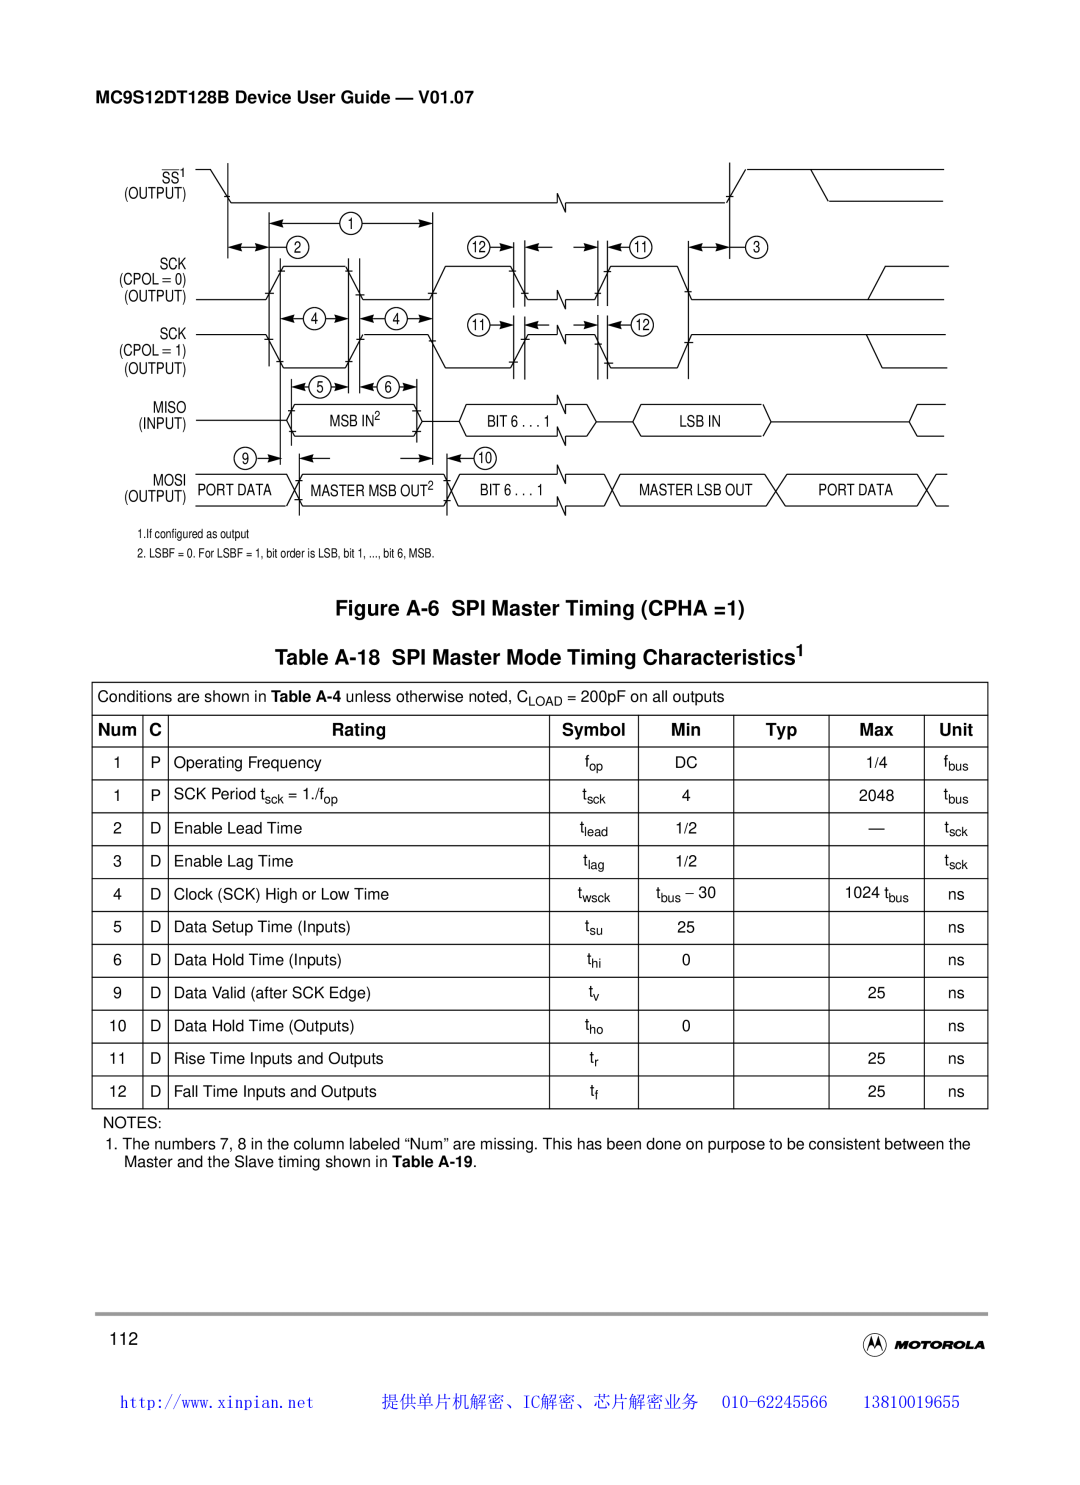 Motorola MC9S12DT128B manual Figure A-6 SPI Master Timing CPHA =1, Table A-18 SPI Master Mode Timing Characteristics1 